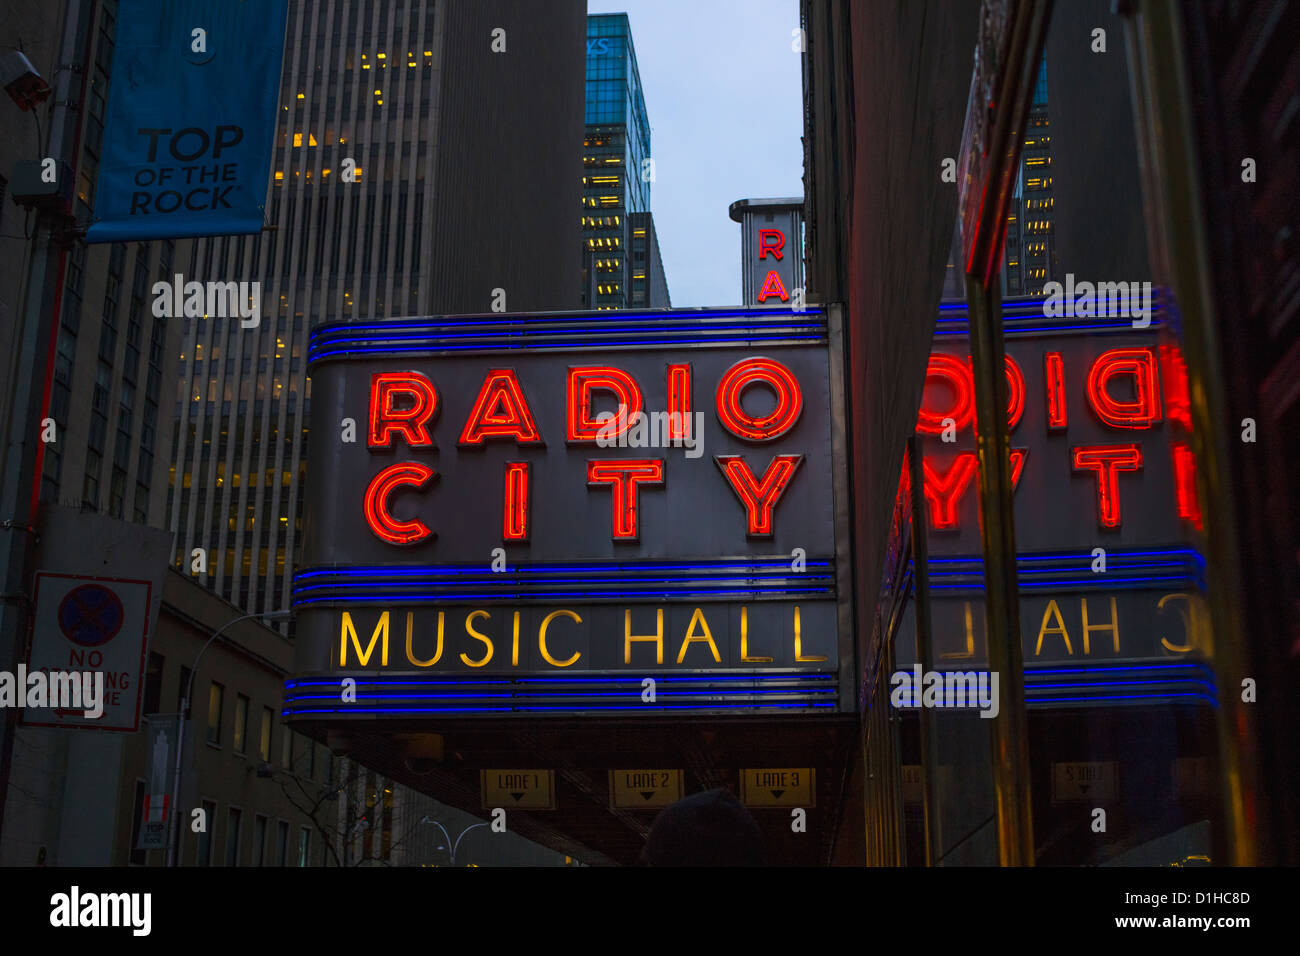 New York The City That Never Sleeps Lettering Stock Vector Image & Art -  Alamy